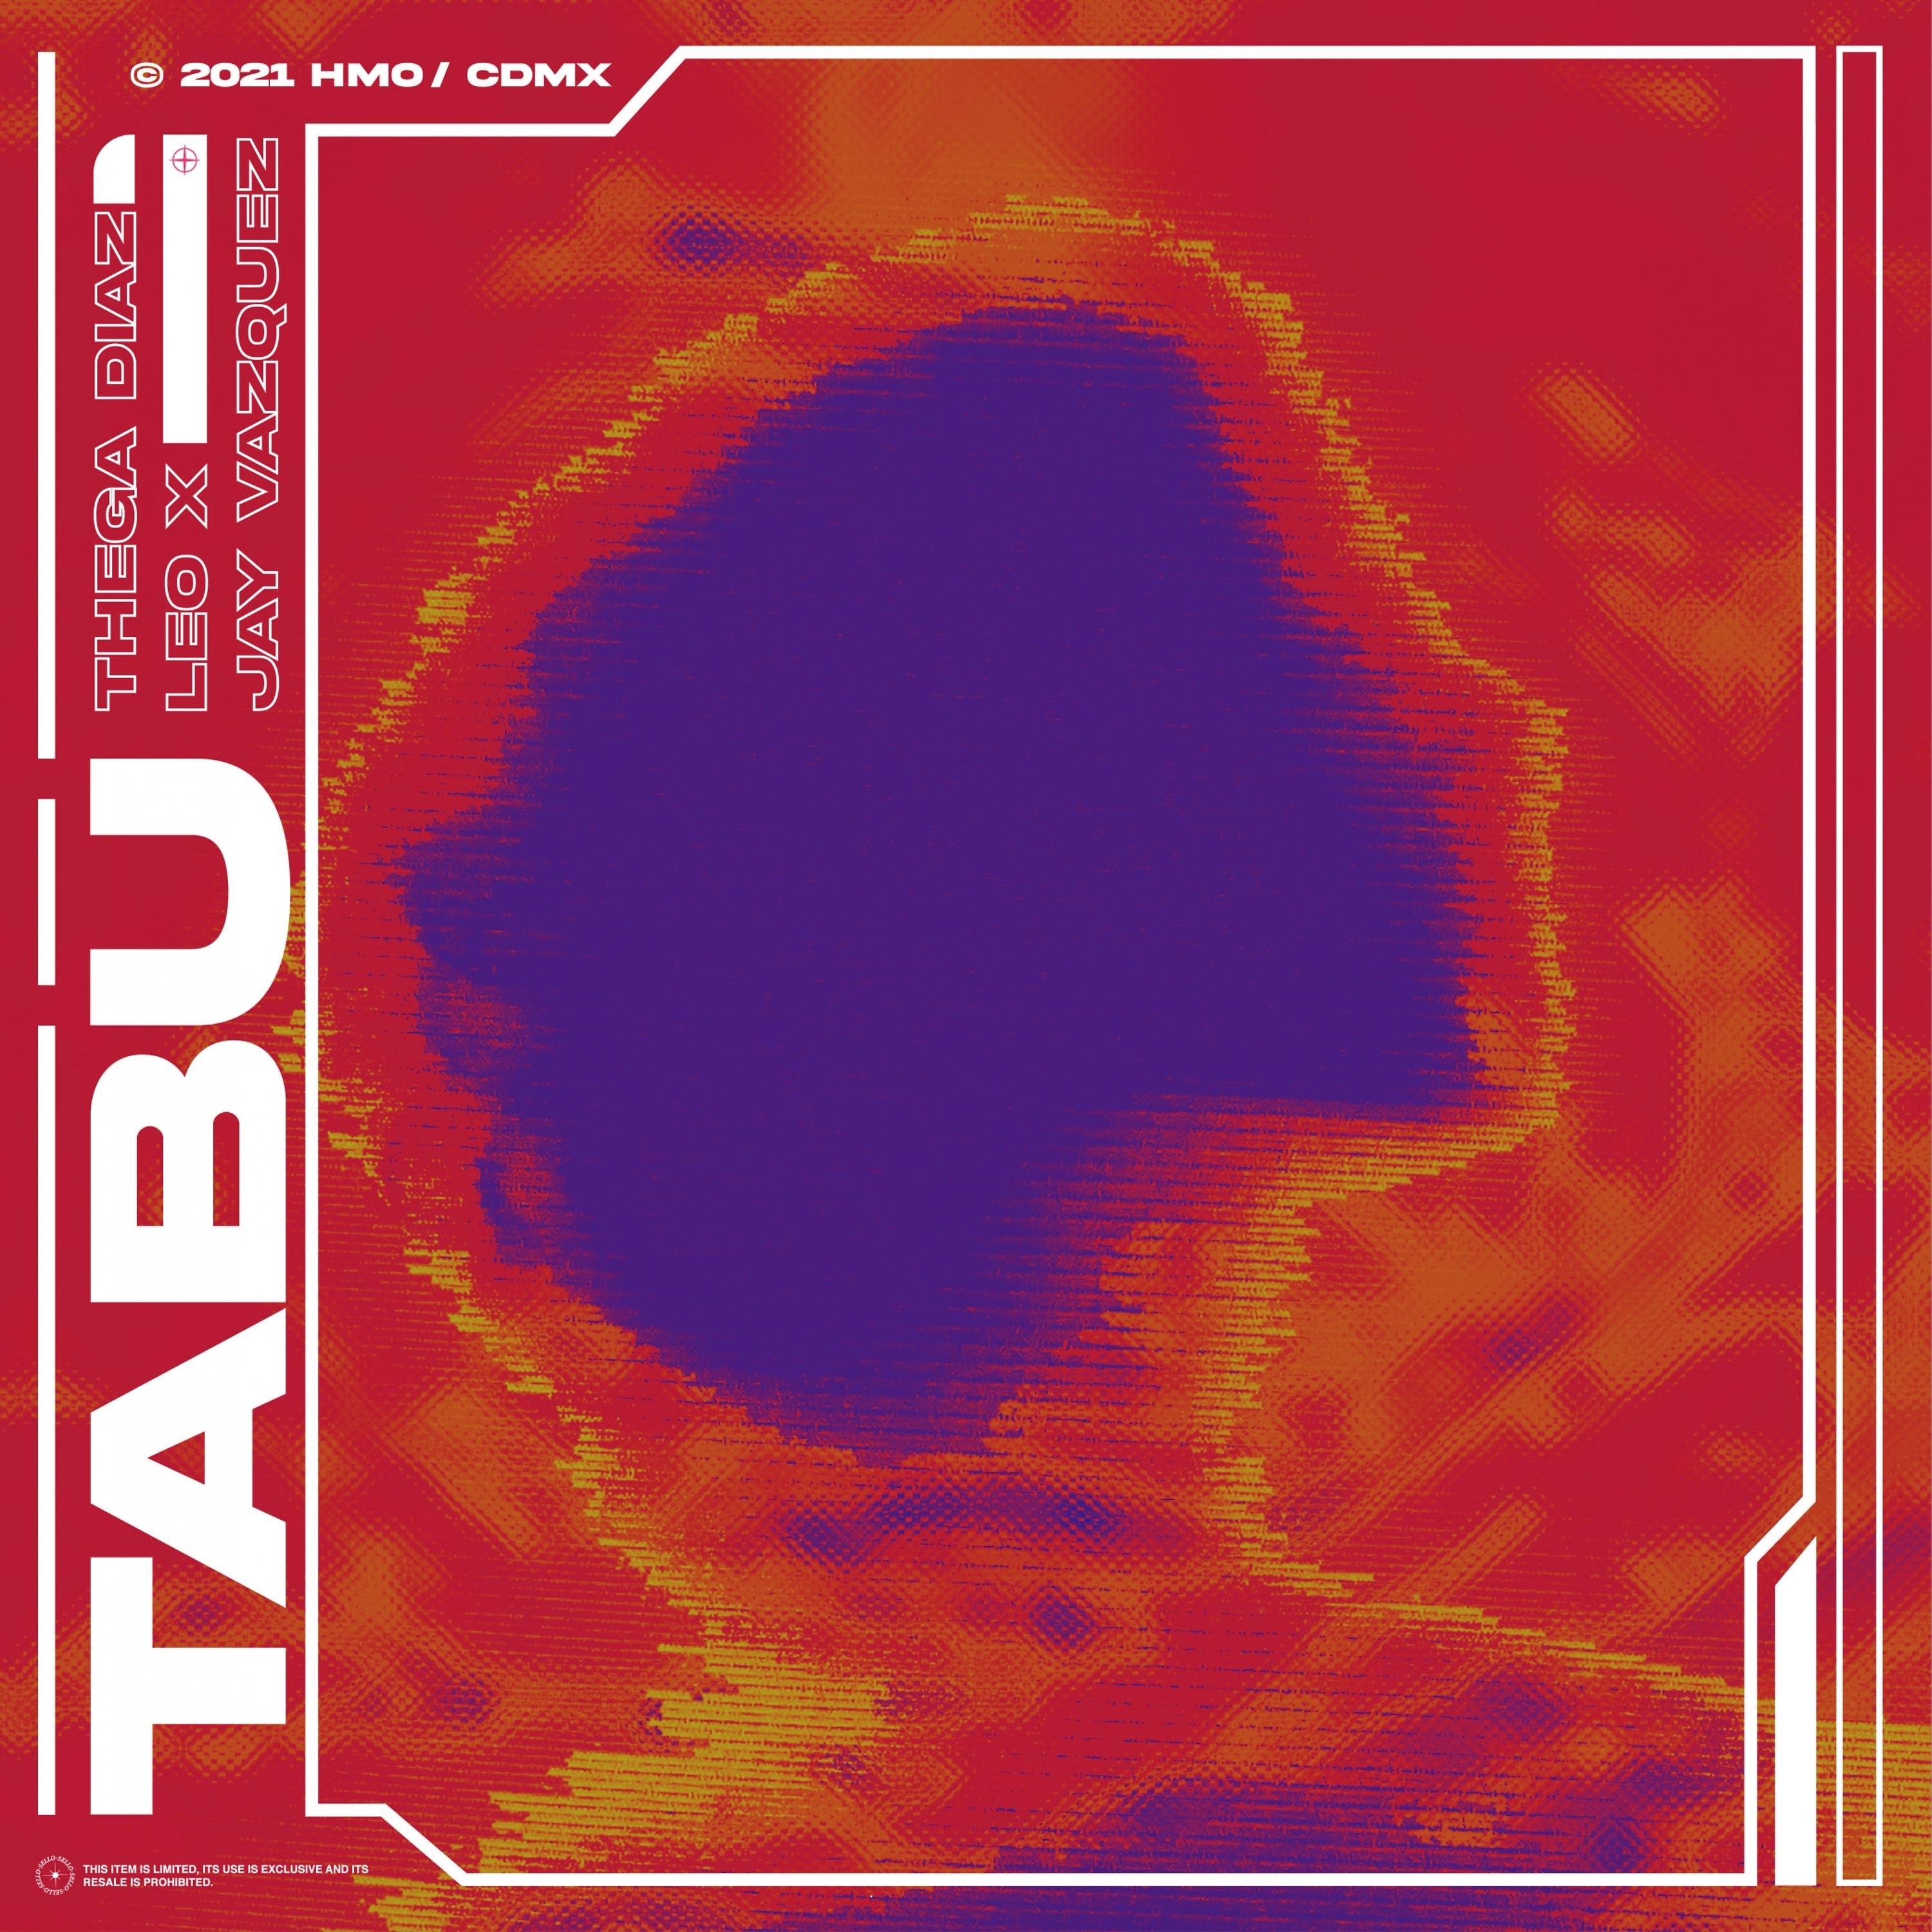 Постер альбома Tabú